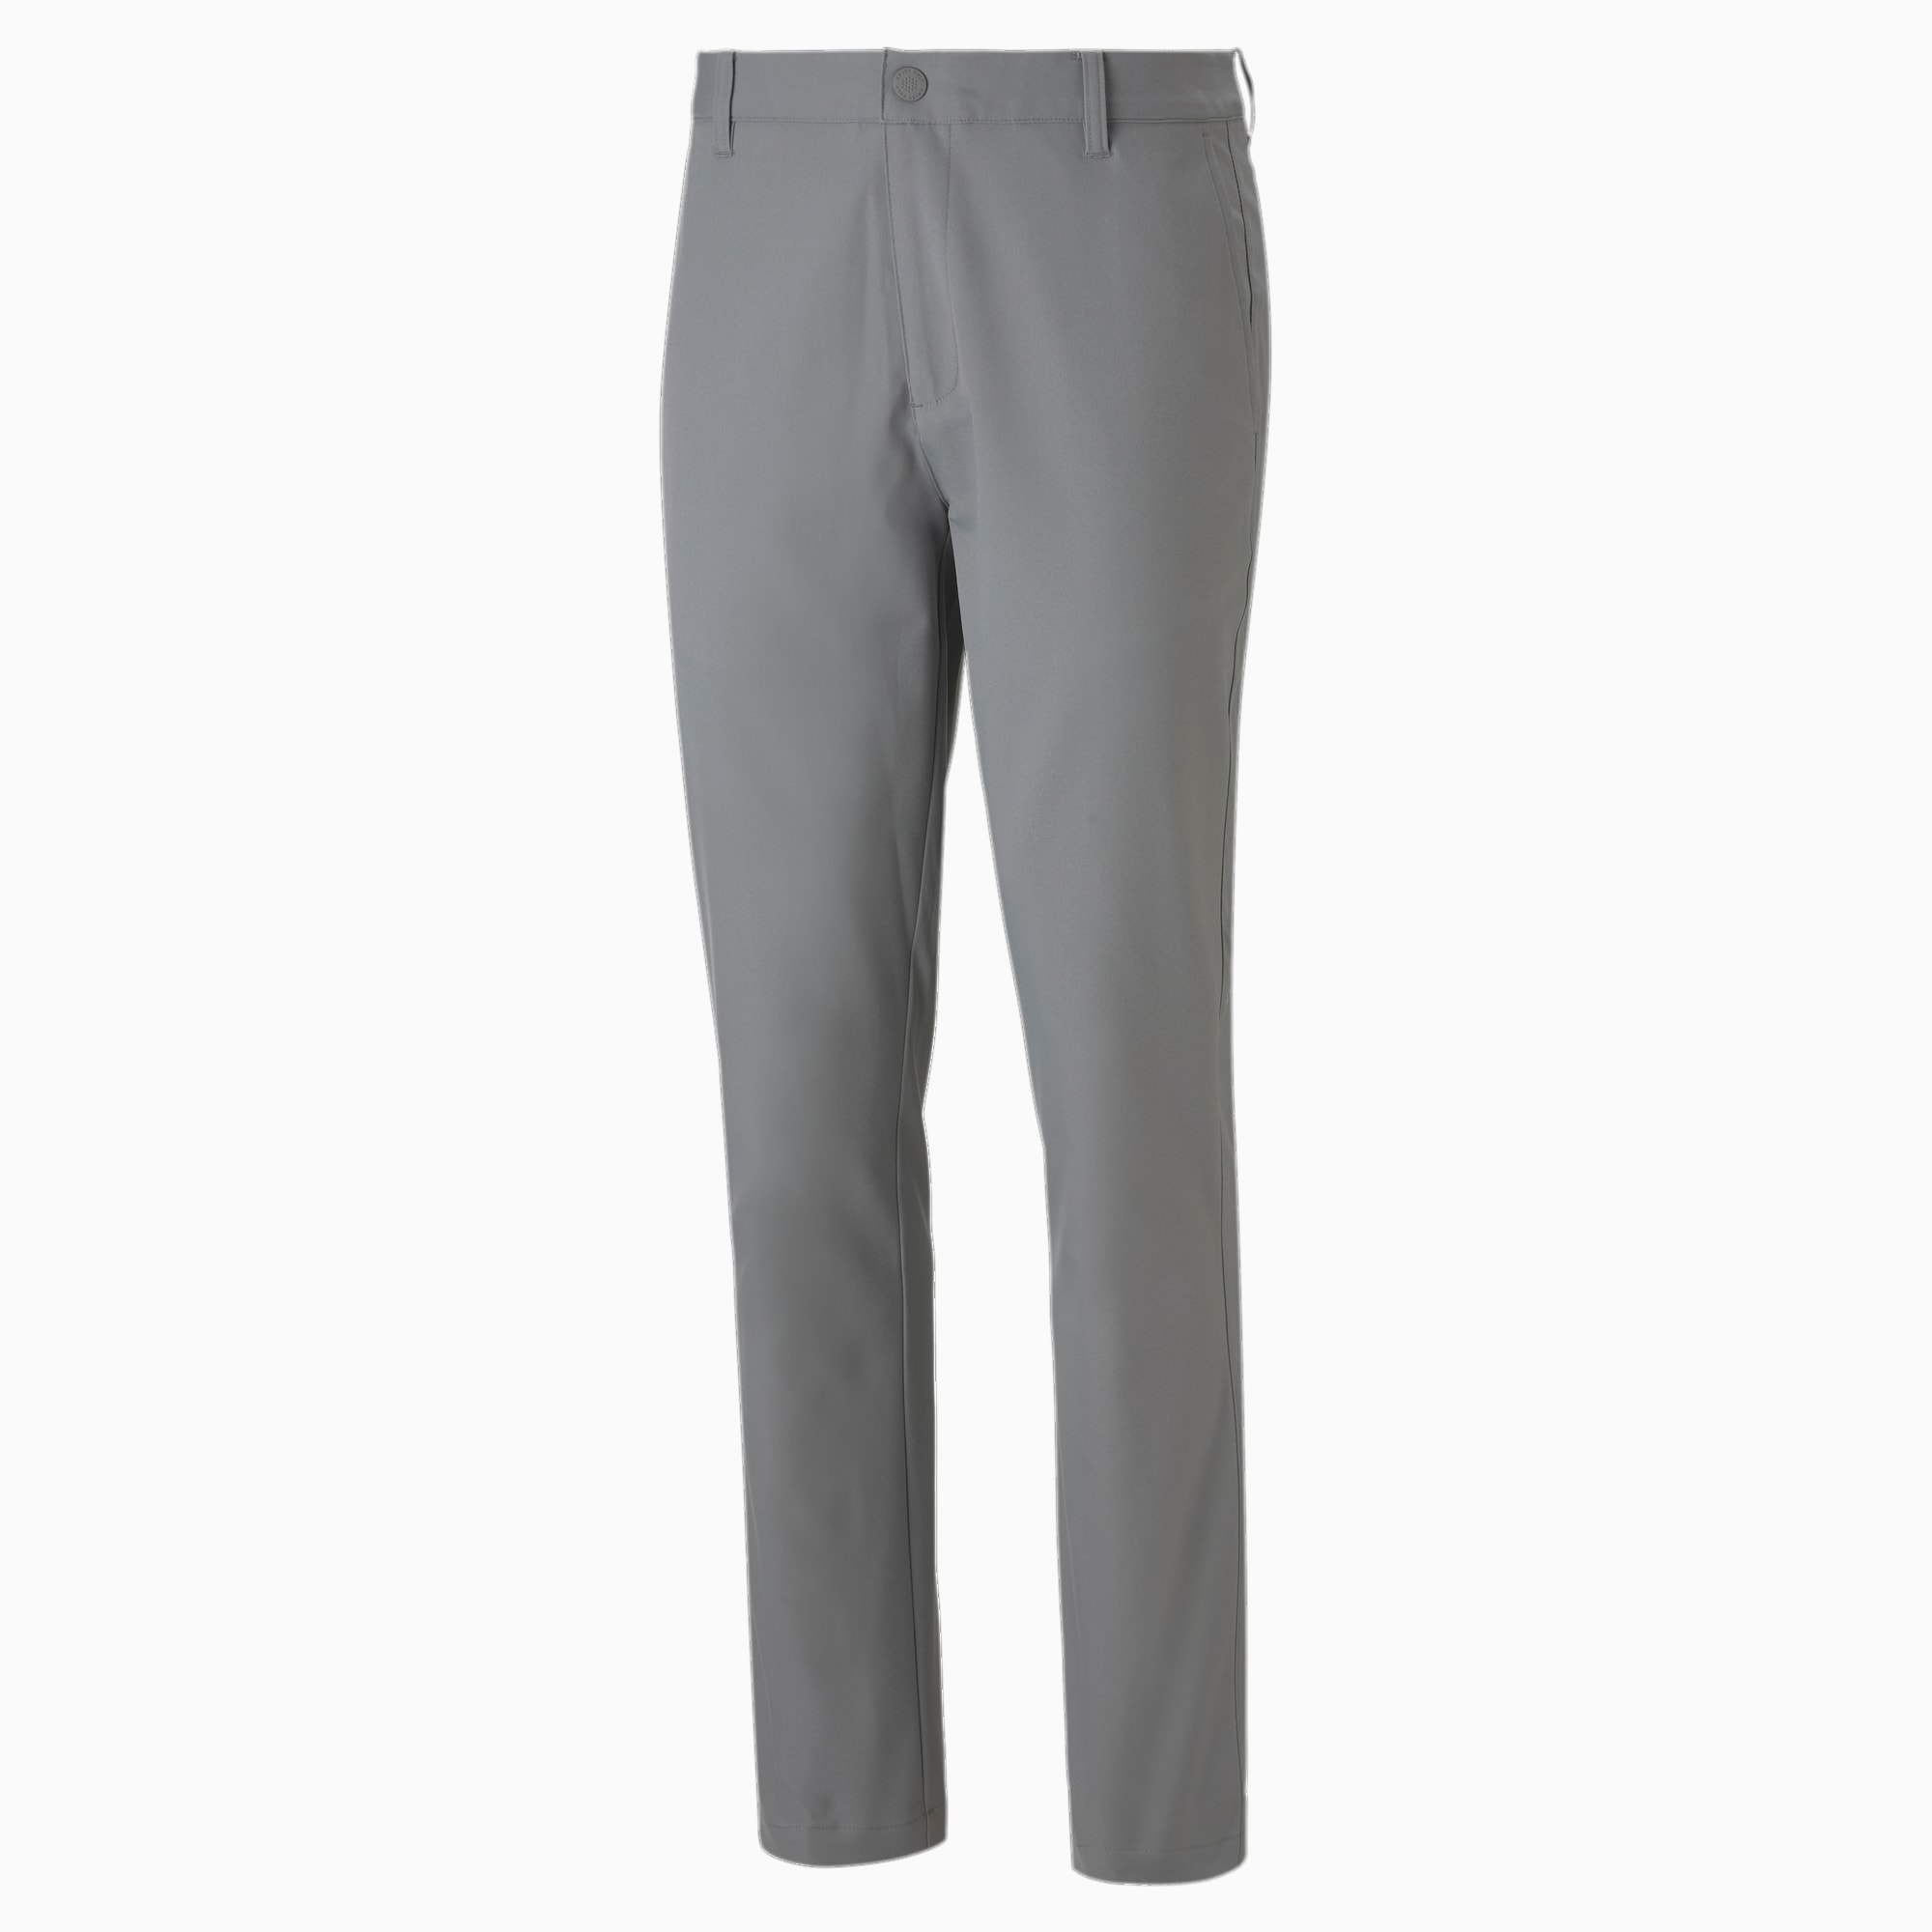 PUMA Dealer Tailored Golf Pants Men, Slate Sky, Size 36/32, Clothing